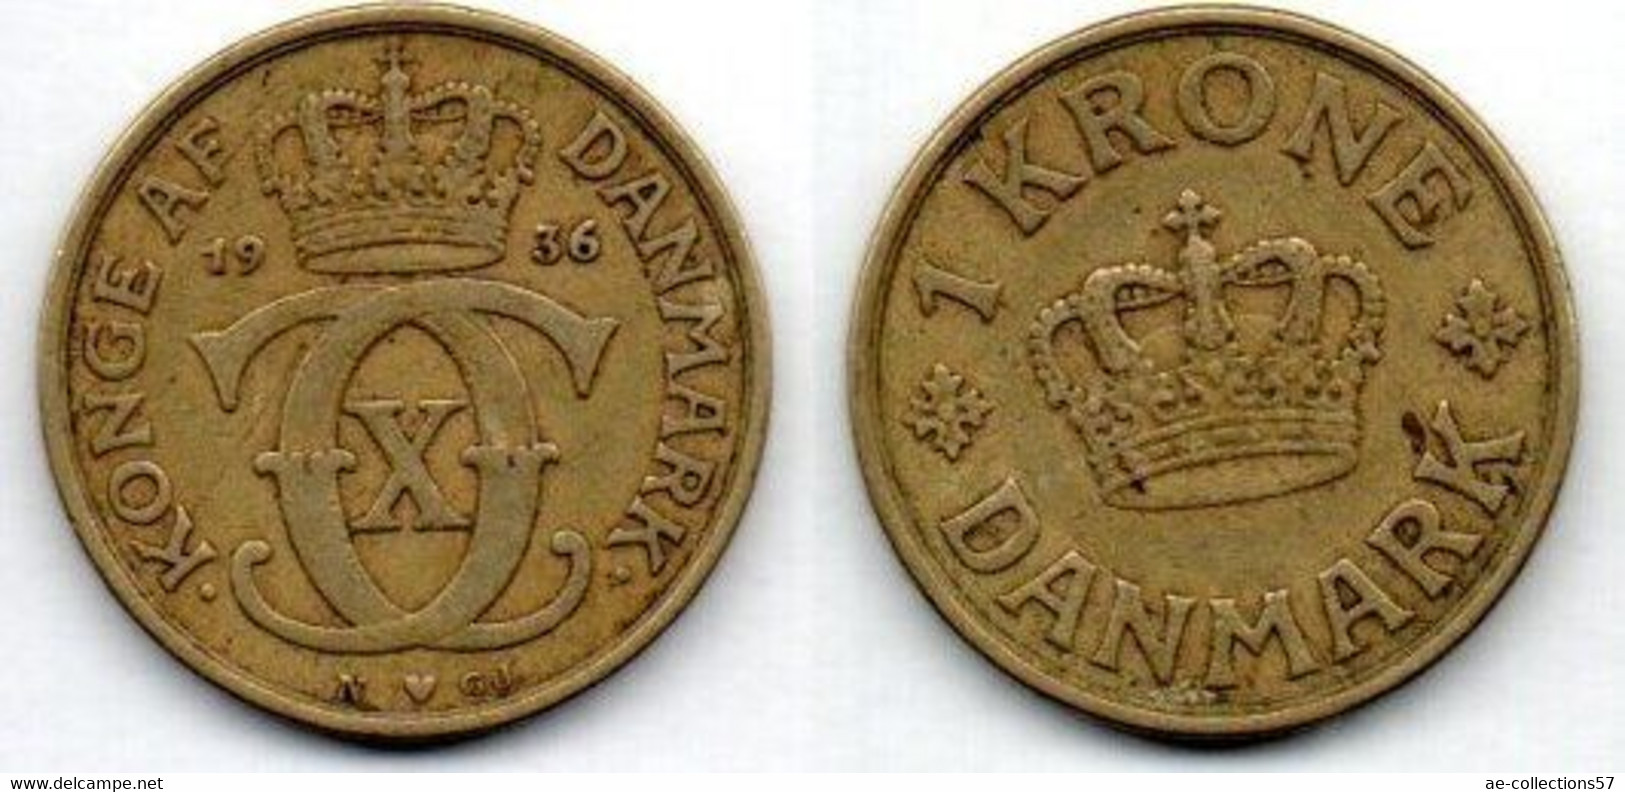 MA 18488 /  Danemark - Denmark - Dänemark 1 Krone 1936 NGJ TB+ - Denemarken